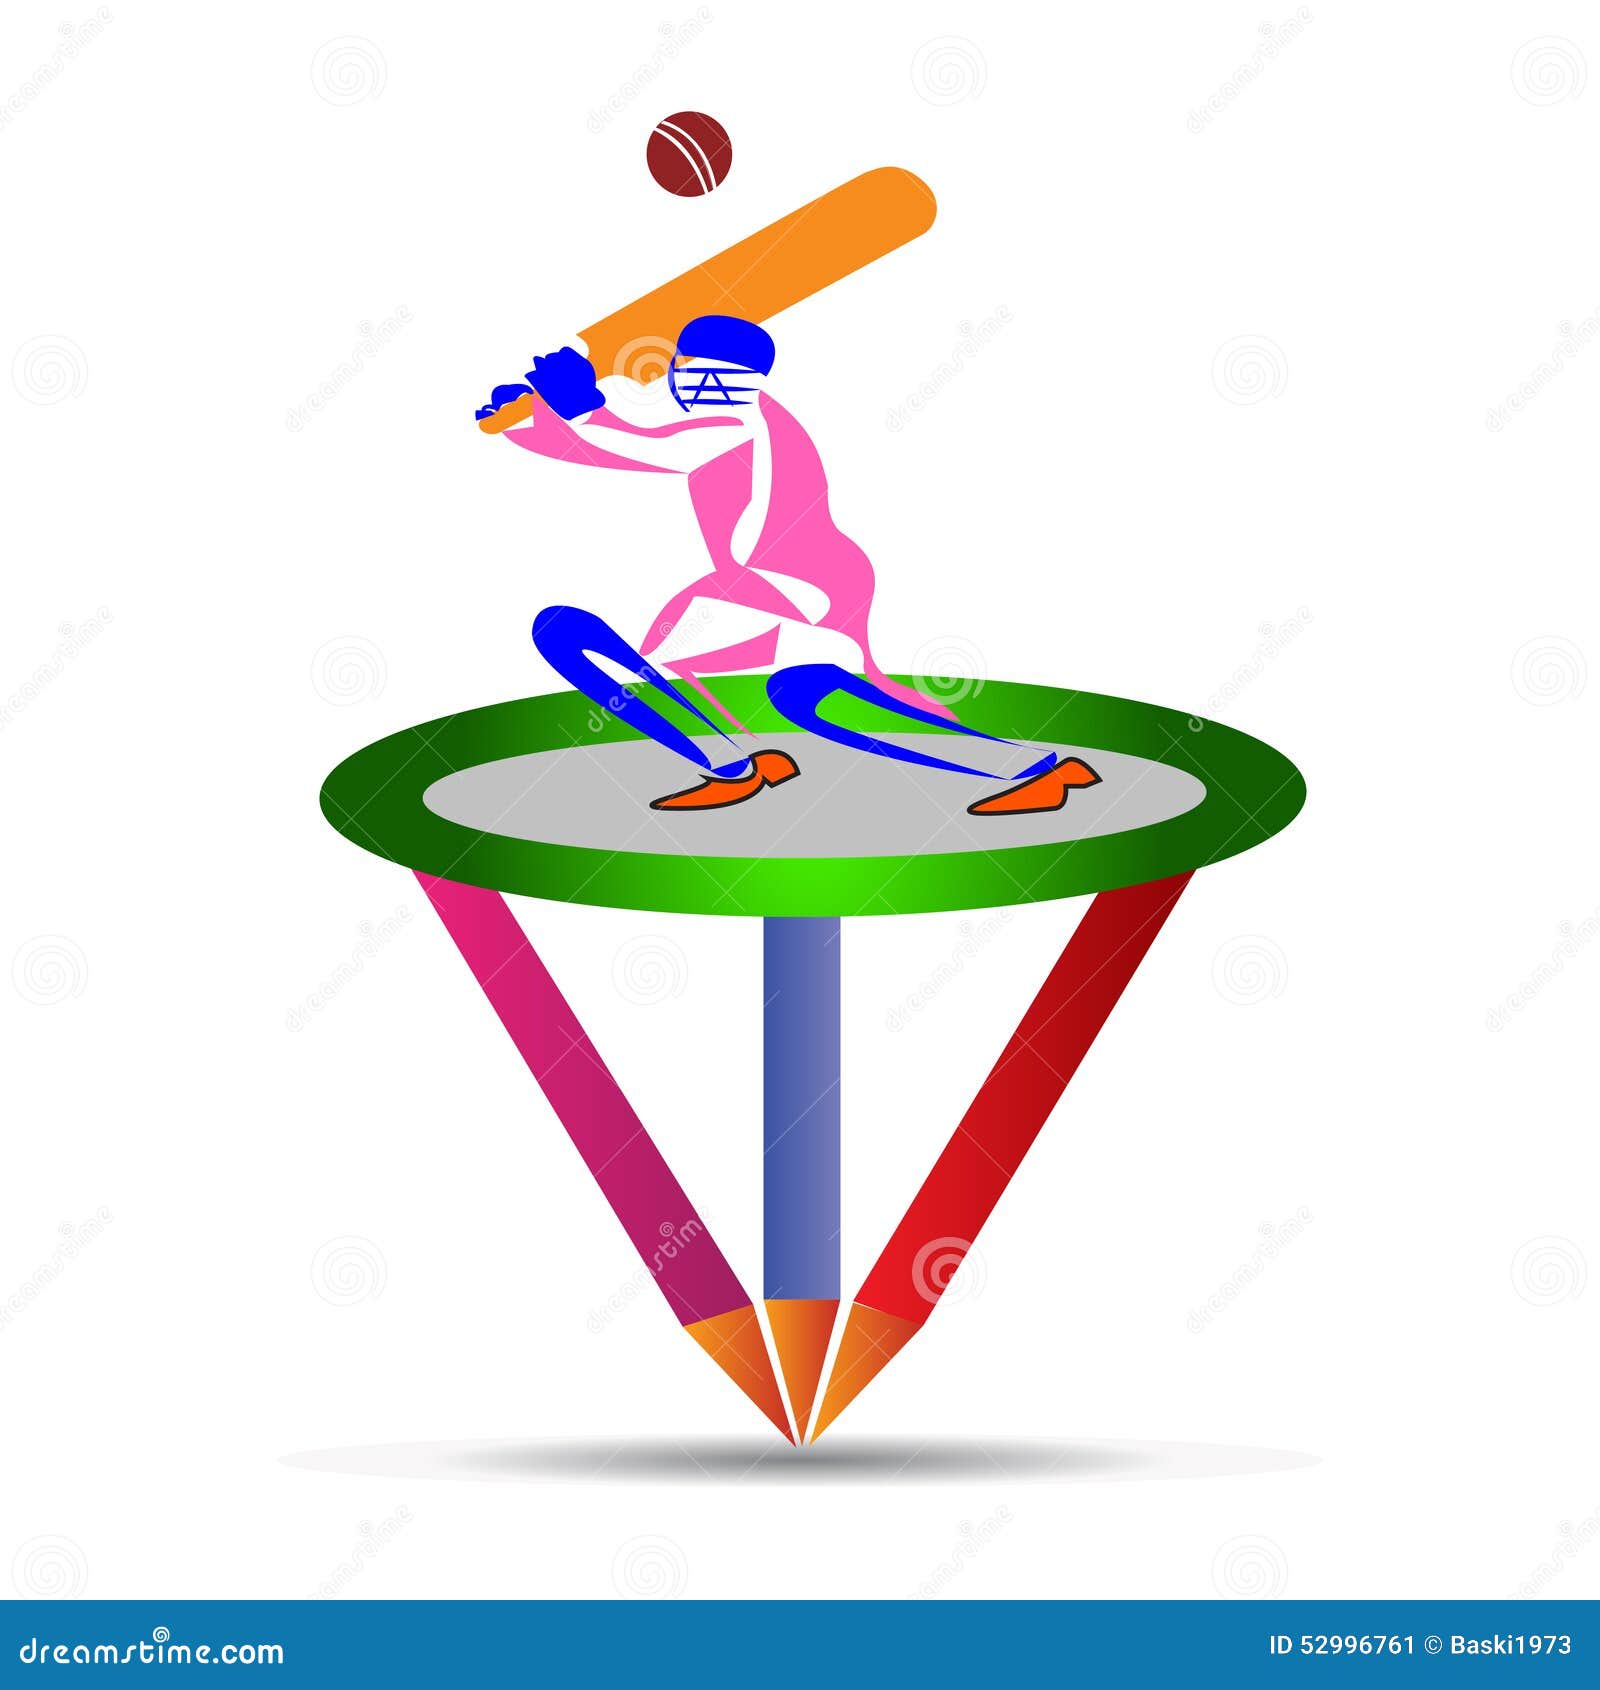 cricket logo clipart - photo #46